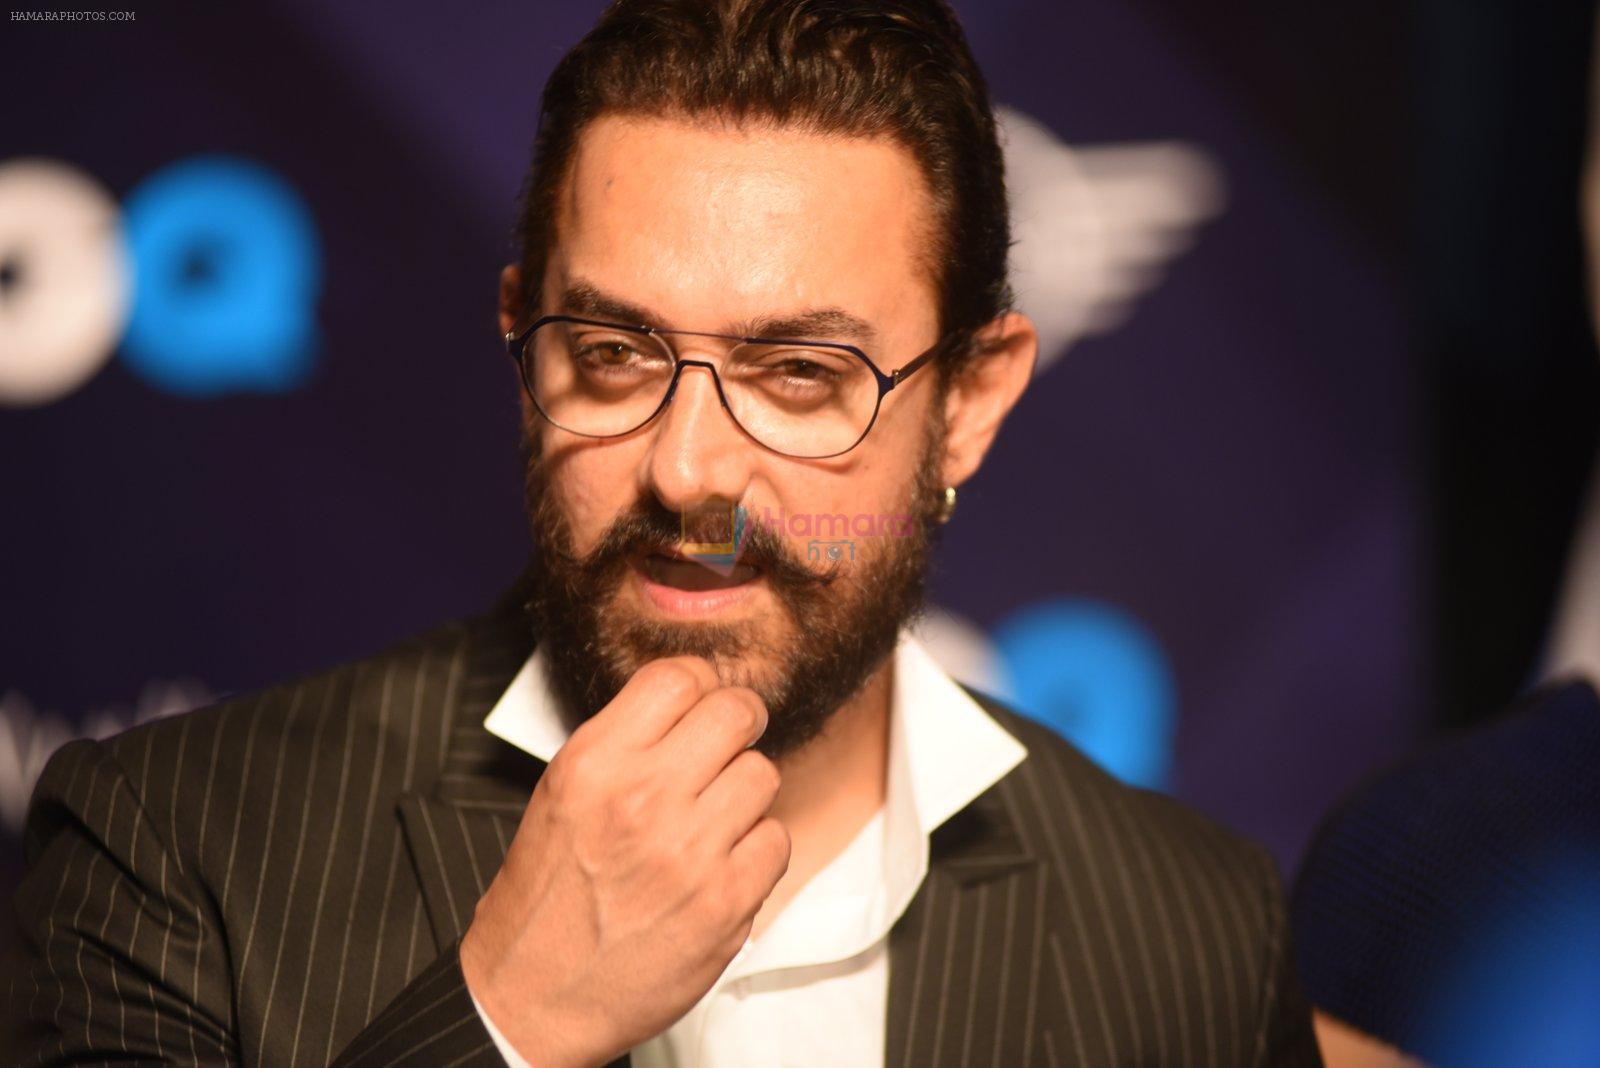 Aamir Khan at GQ Fashion Night on 4th Dec 2016